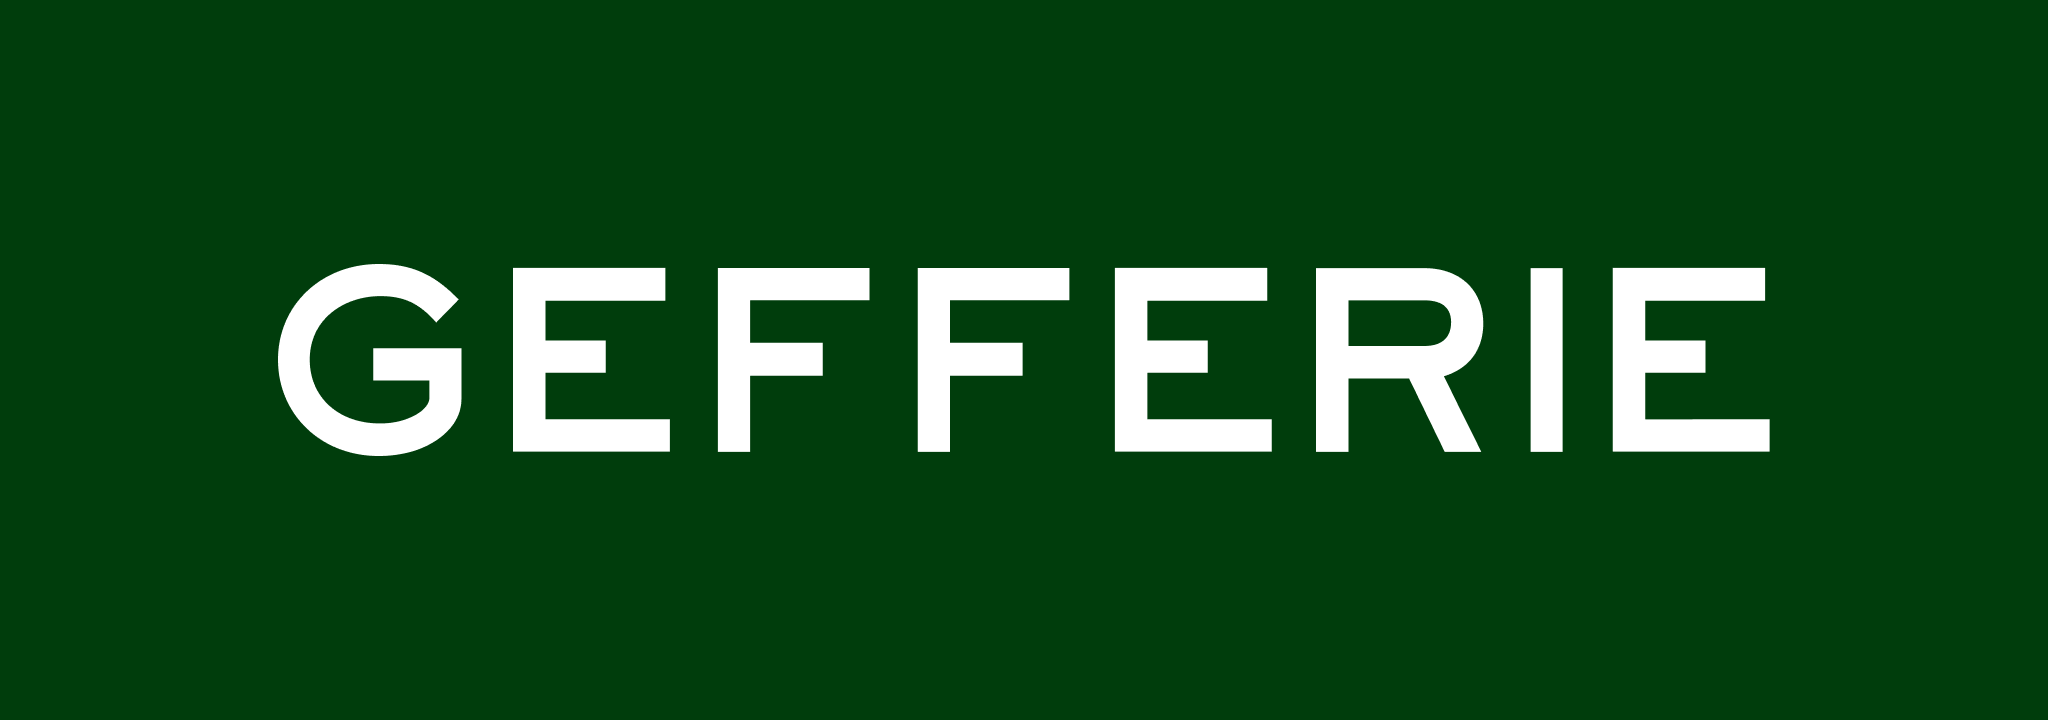 Gefferie-logo-1.png